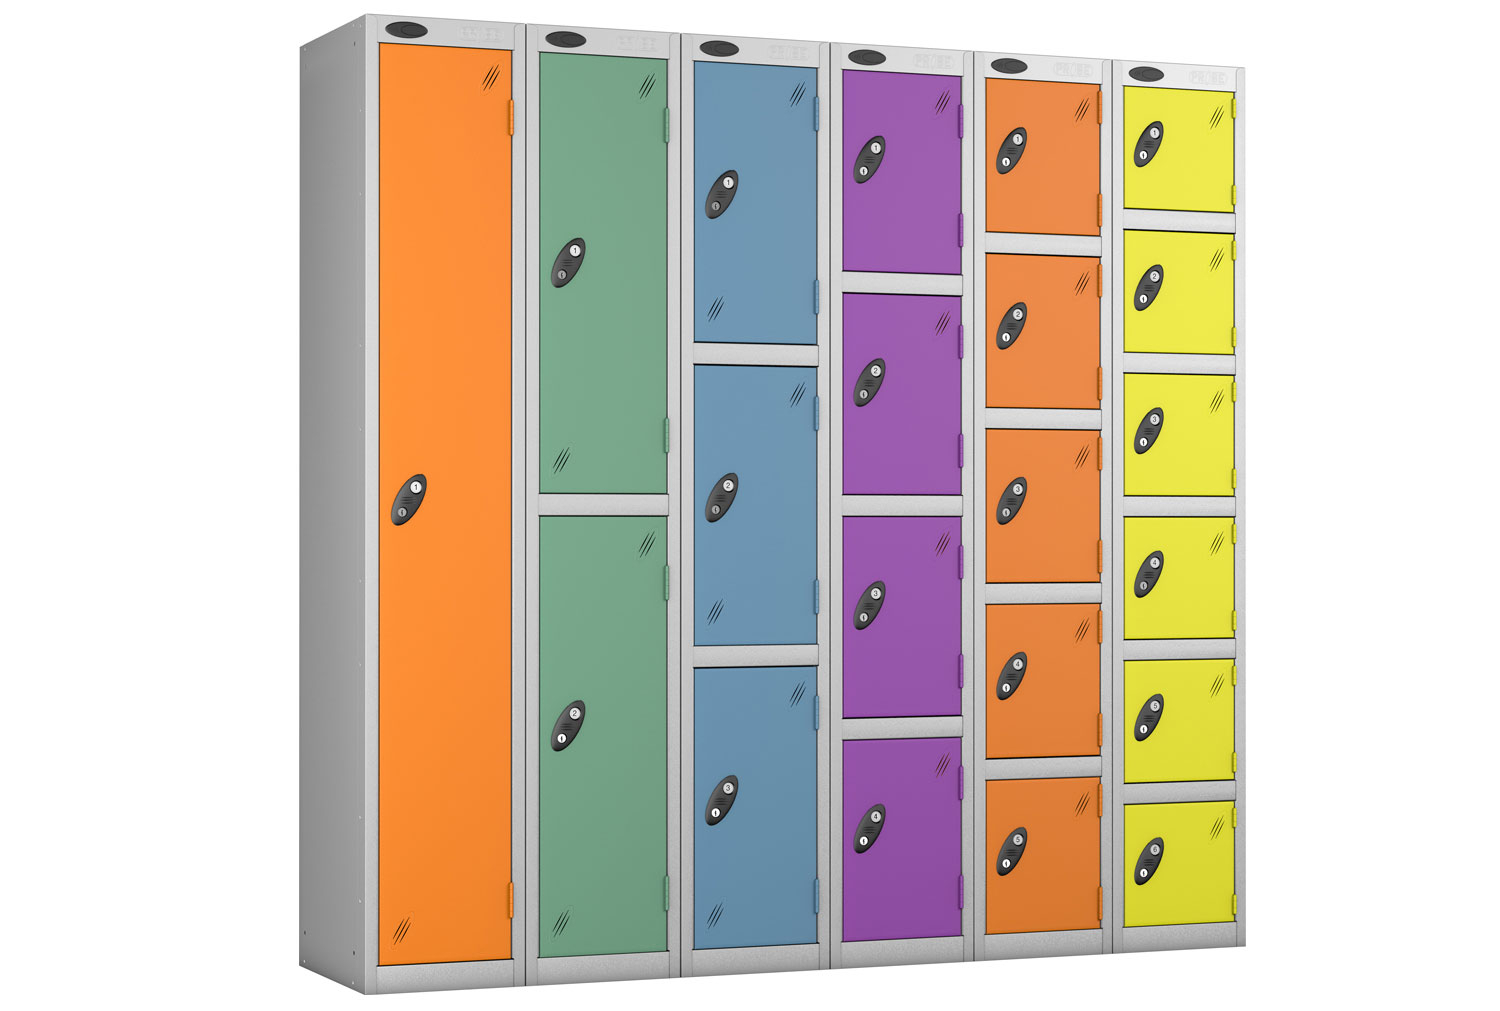 Probe Autumn Colour Lockers With Silver Body, 6 Door, 31wx46dx178h (cm), Hasp Lock, Silver Body, Orange